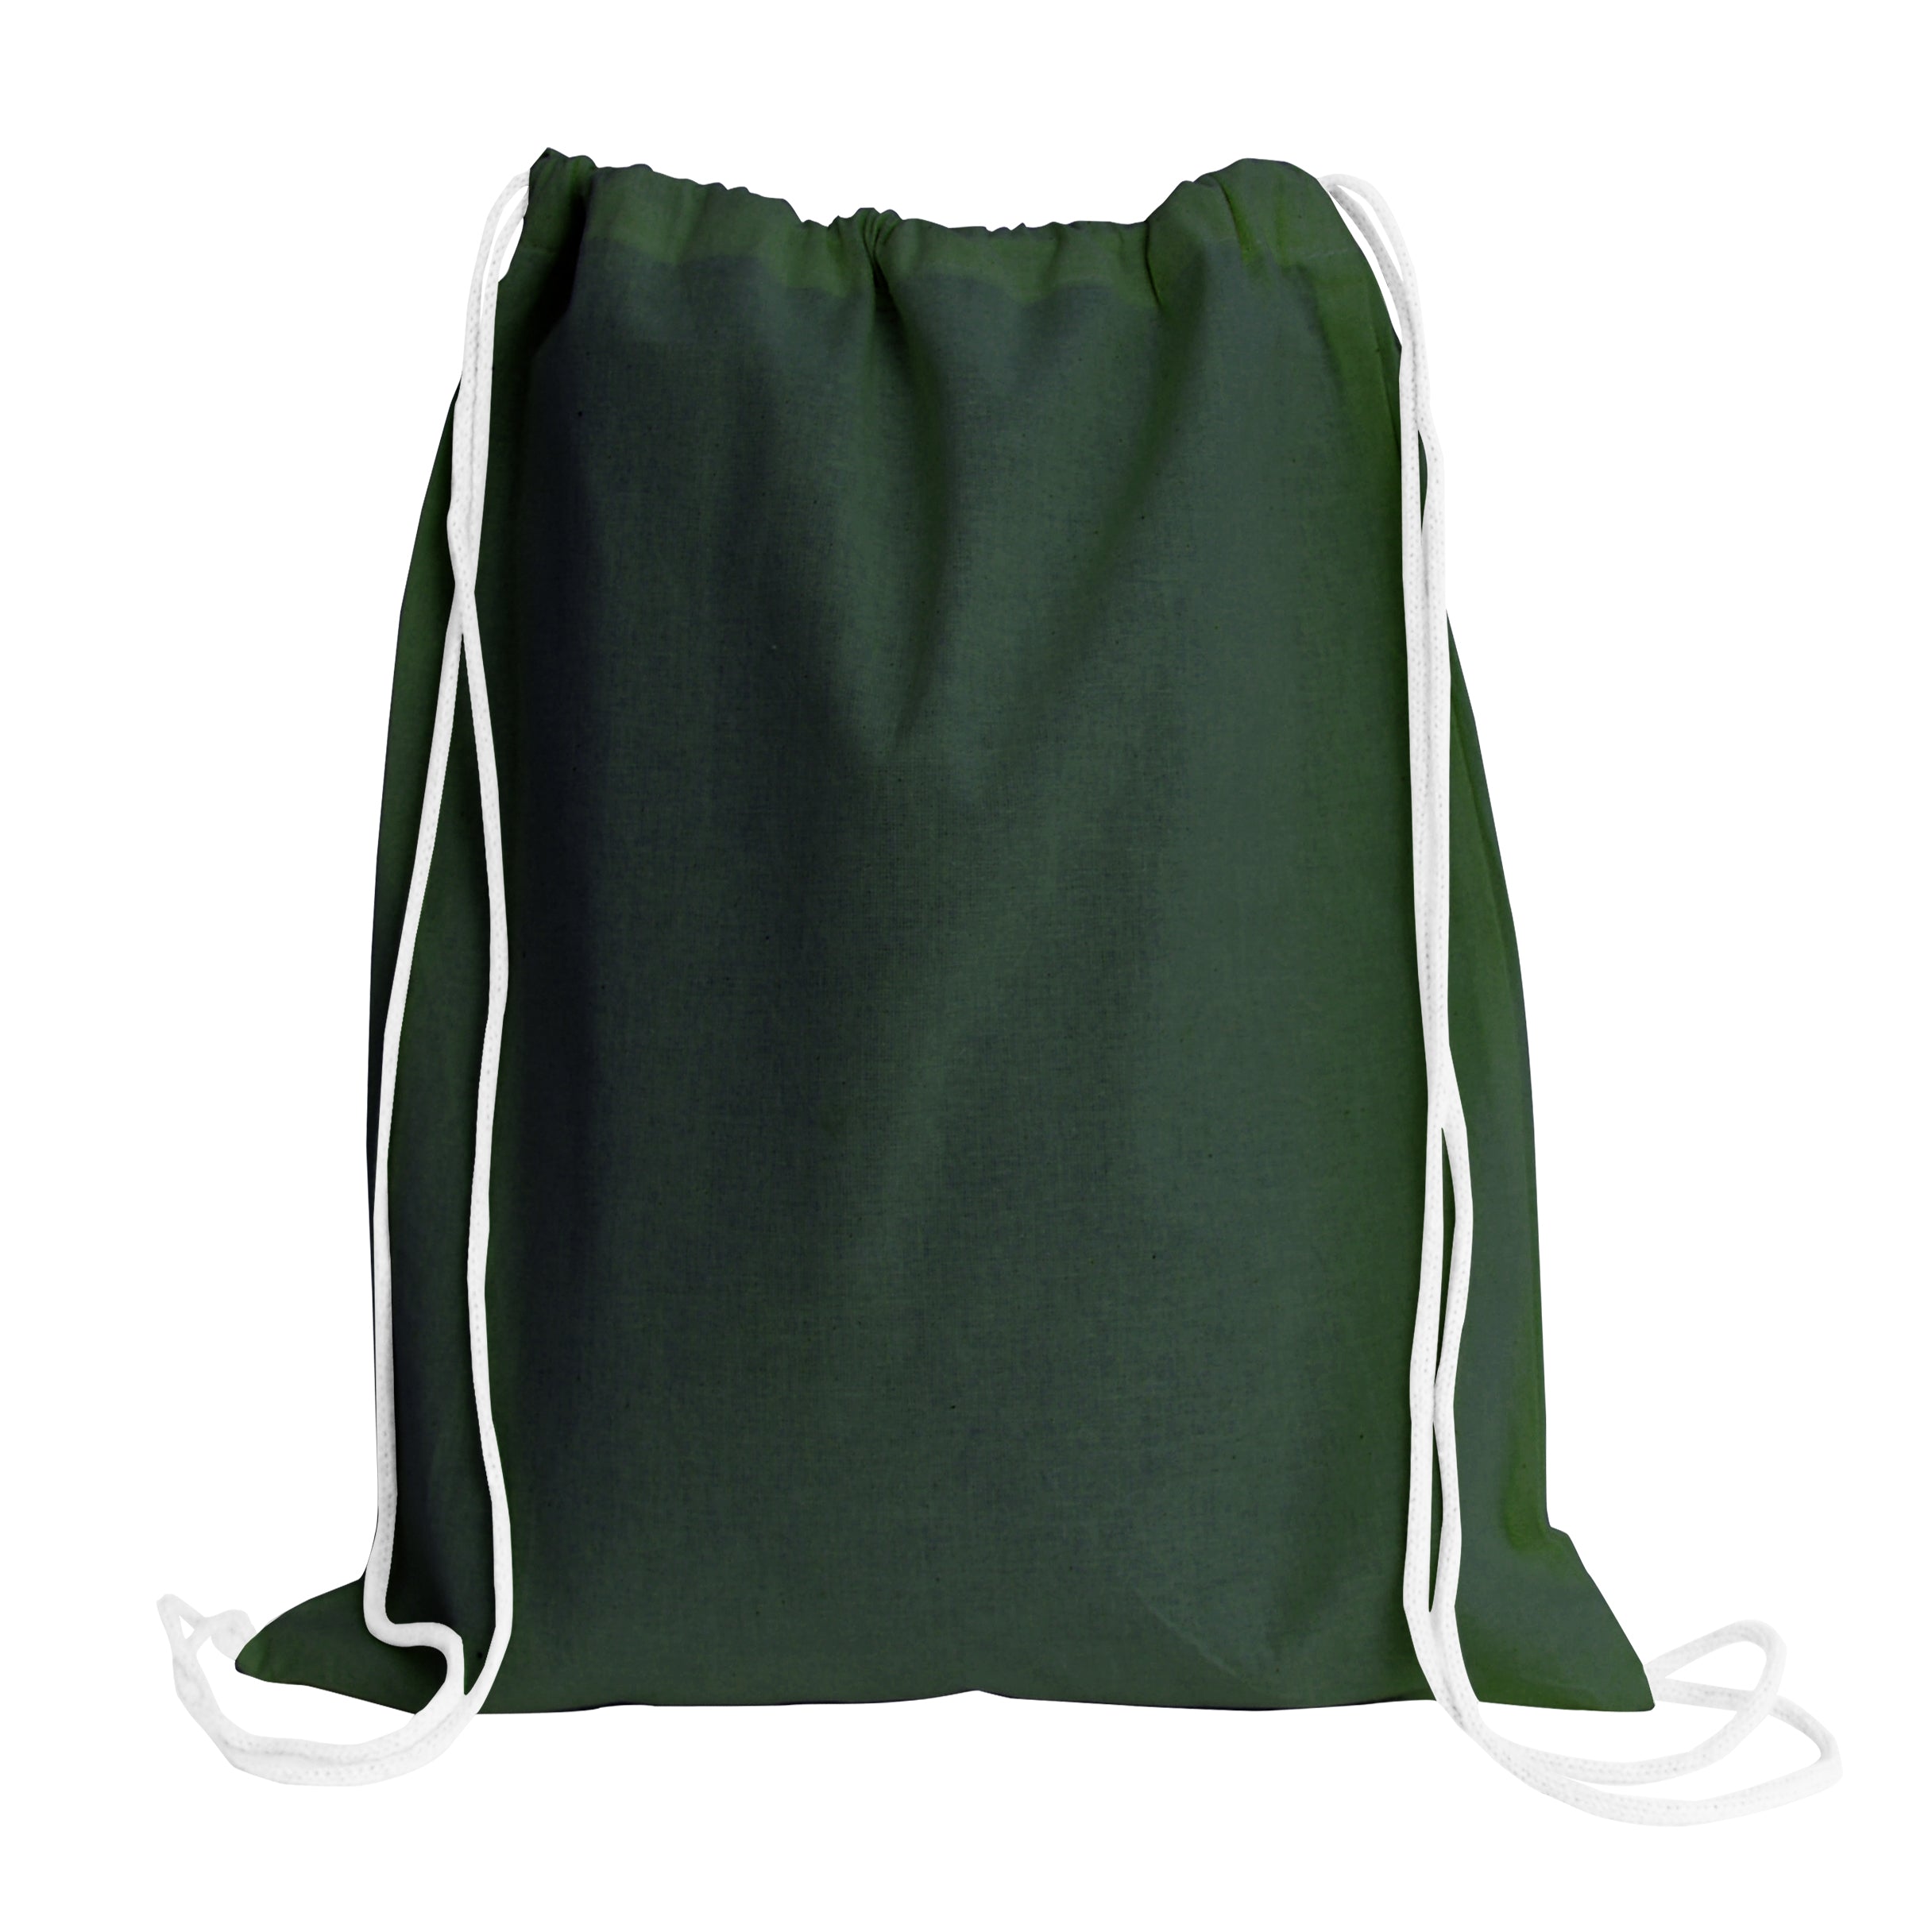 Wholesale Large Size Drawstring bags,Sport Cheap Drawstring Bags Cinch